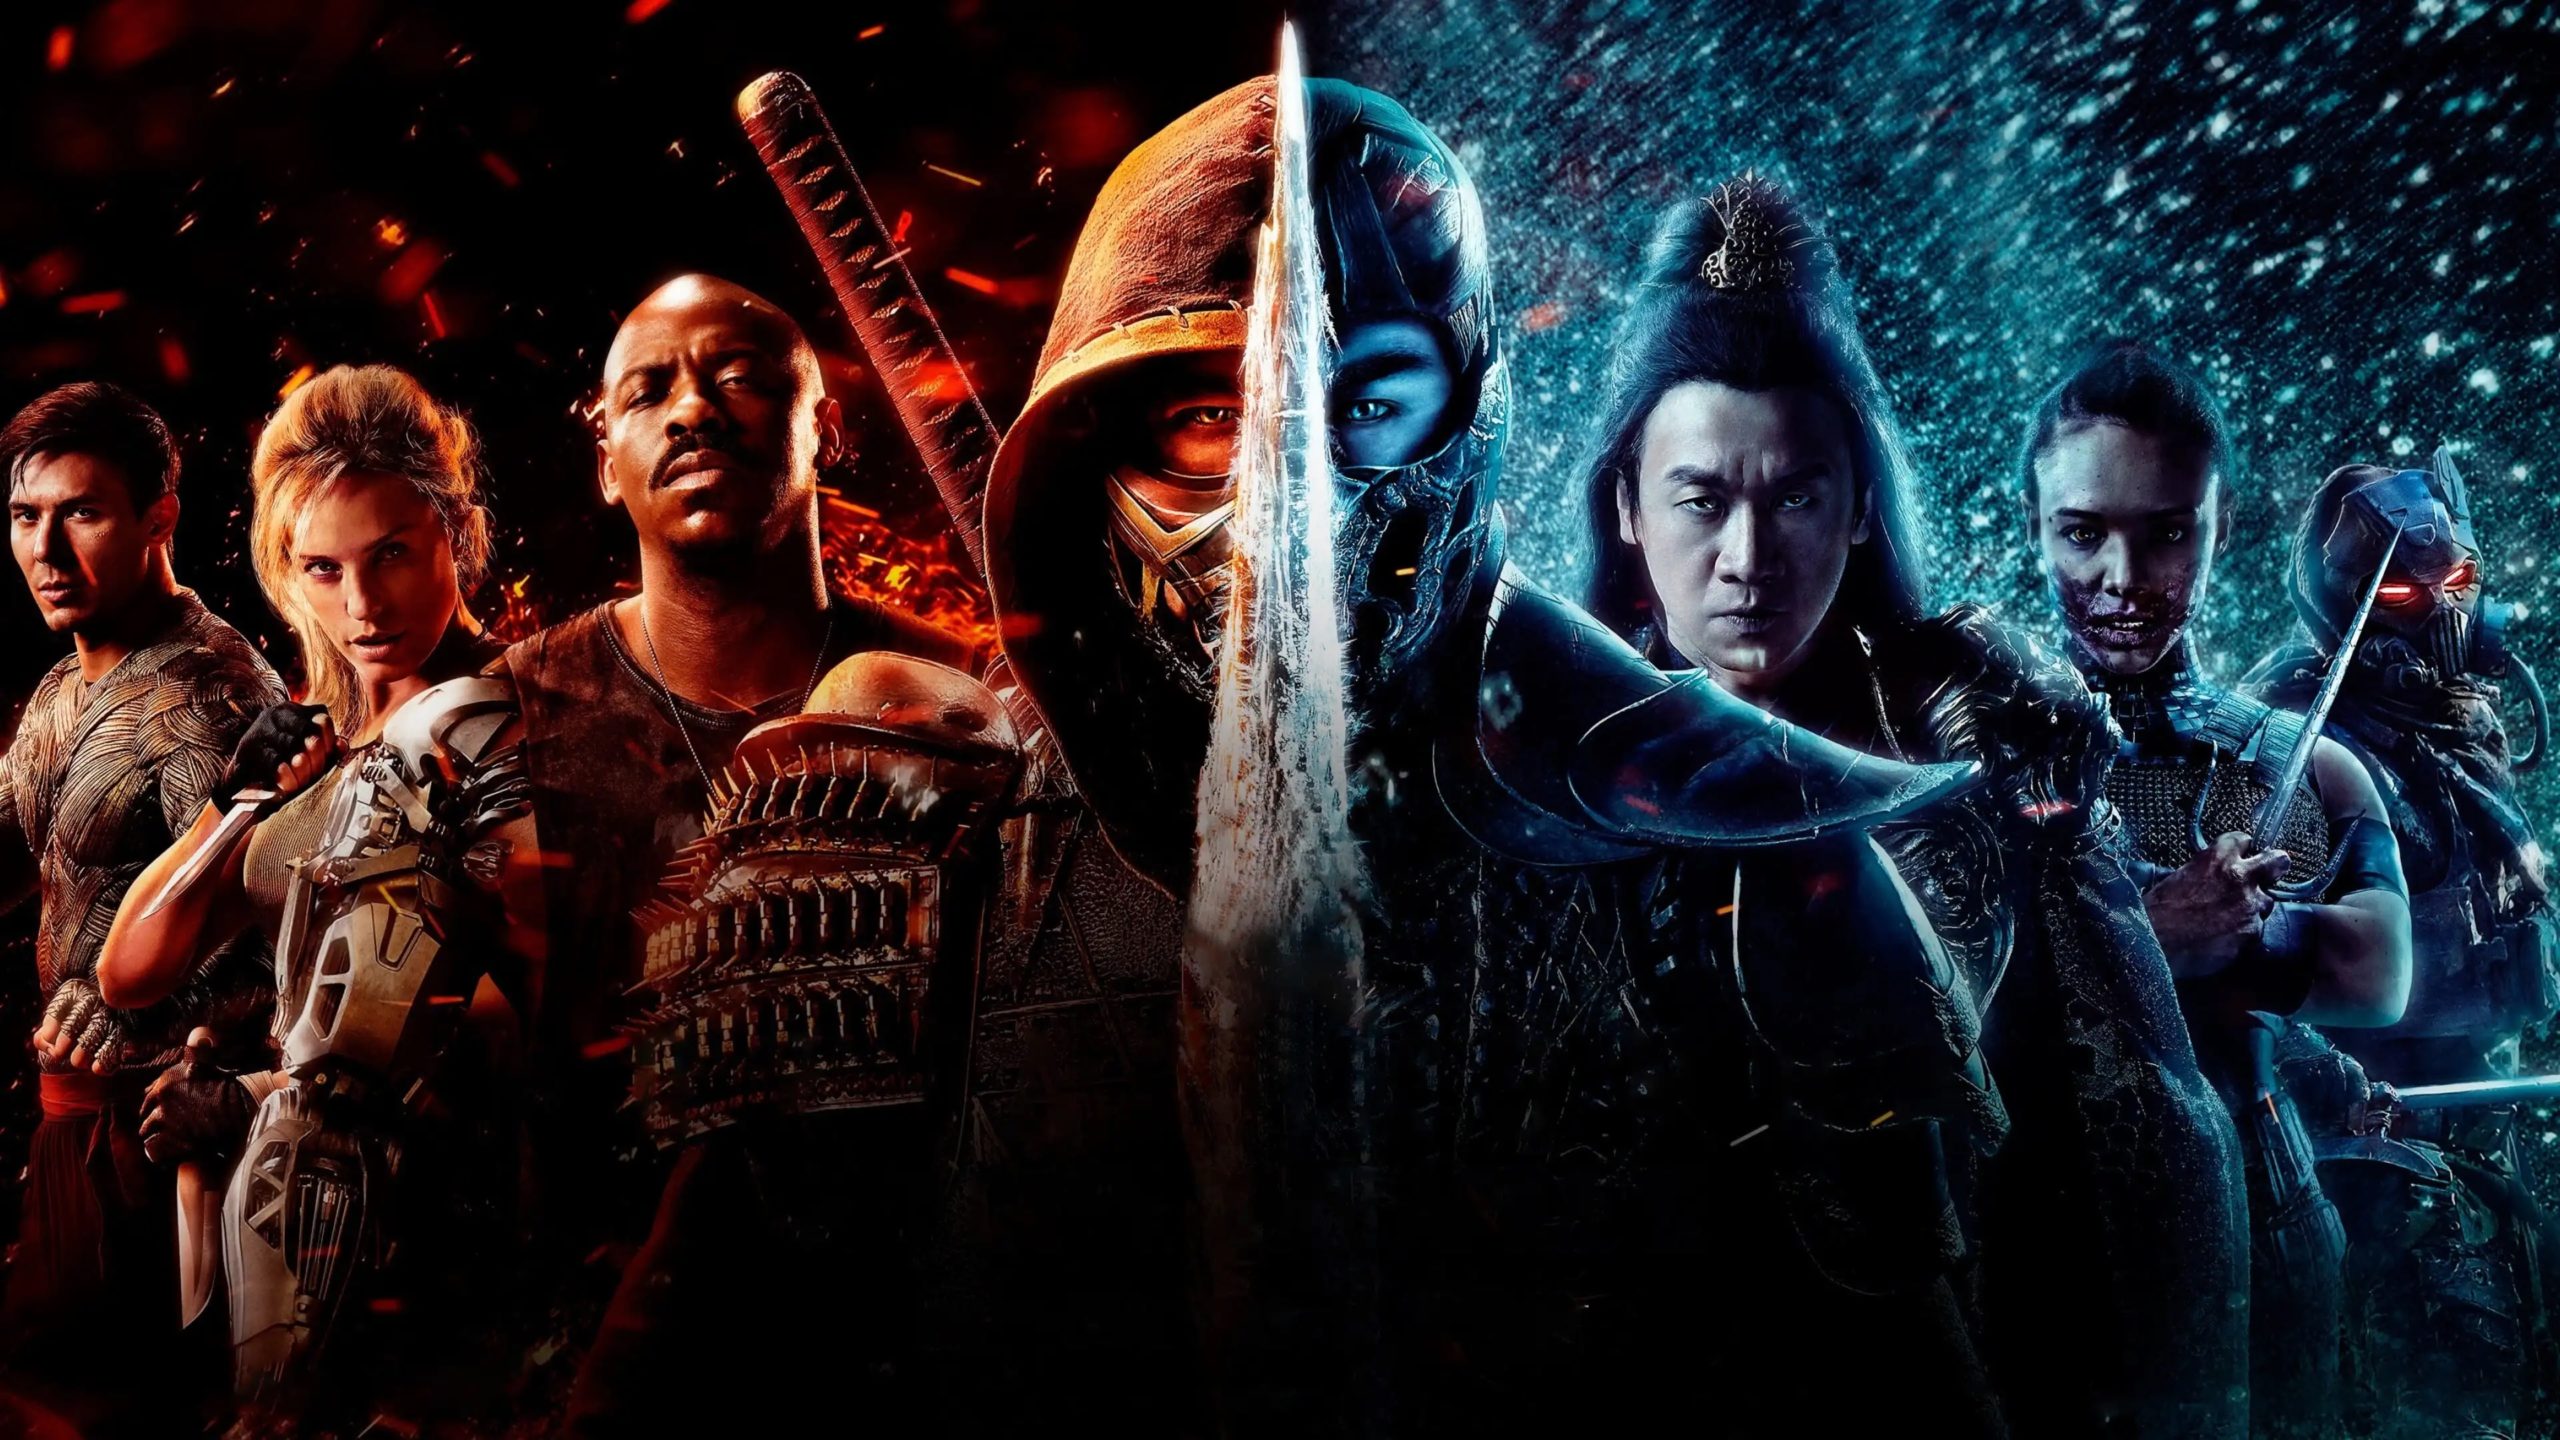 Mortal Kombat 2021 sequel film greenlit with Moon Knight script writer